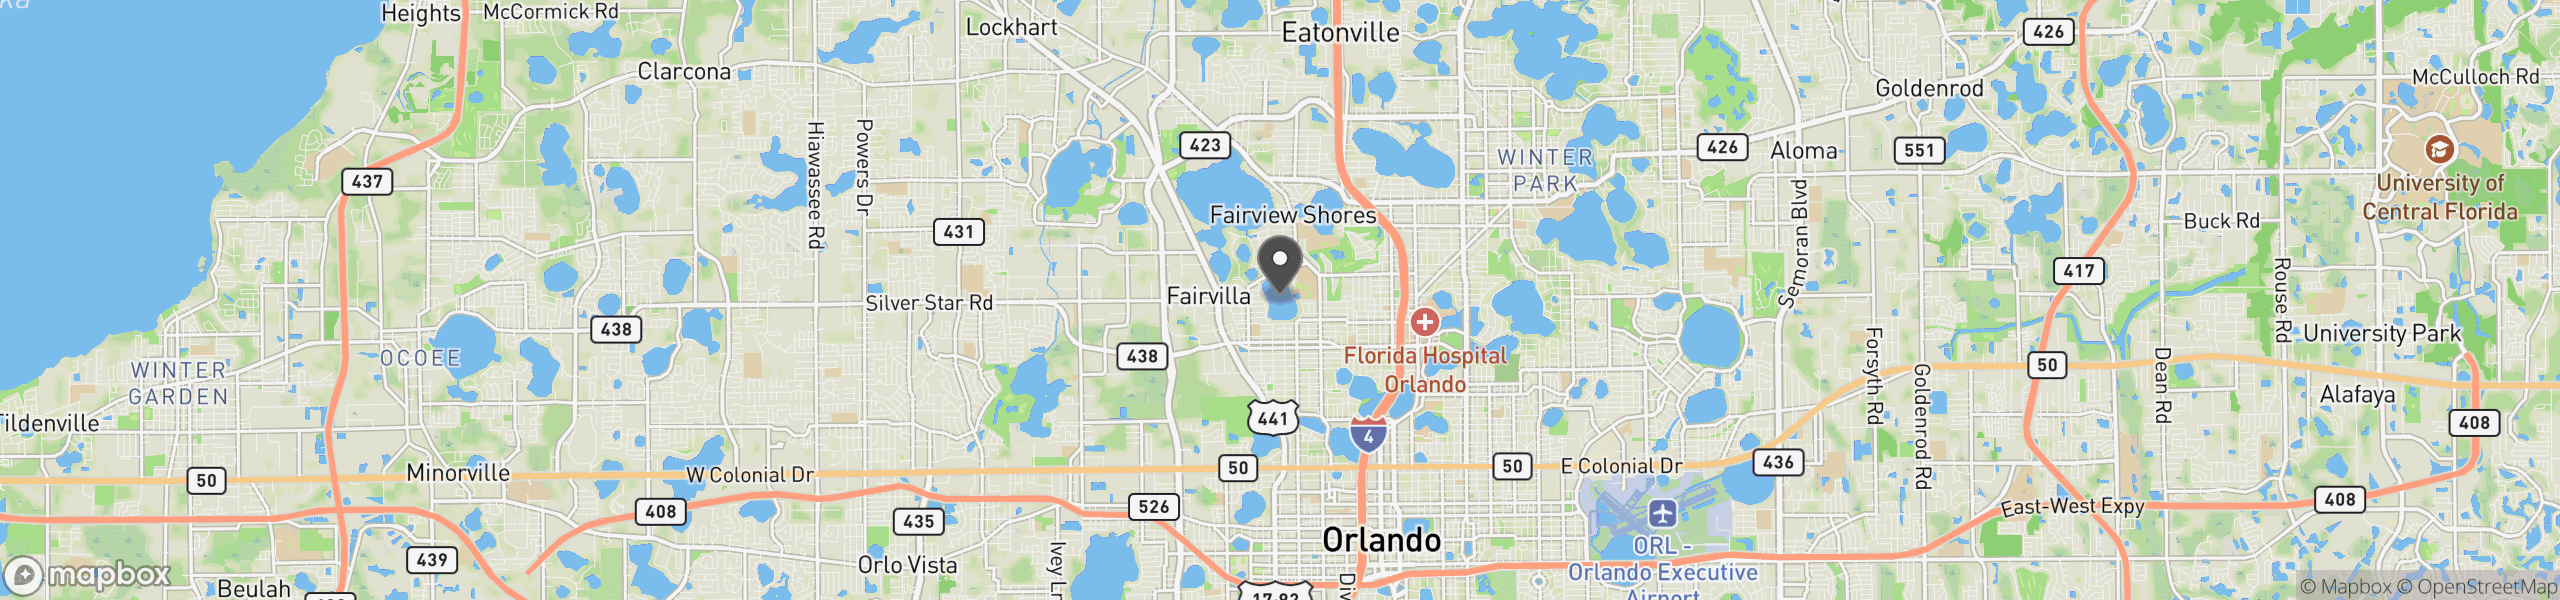 Orlando, FL 32804